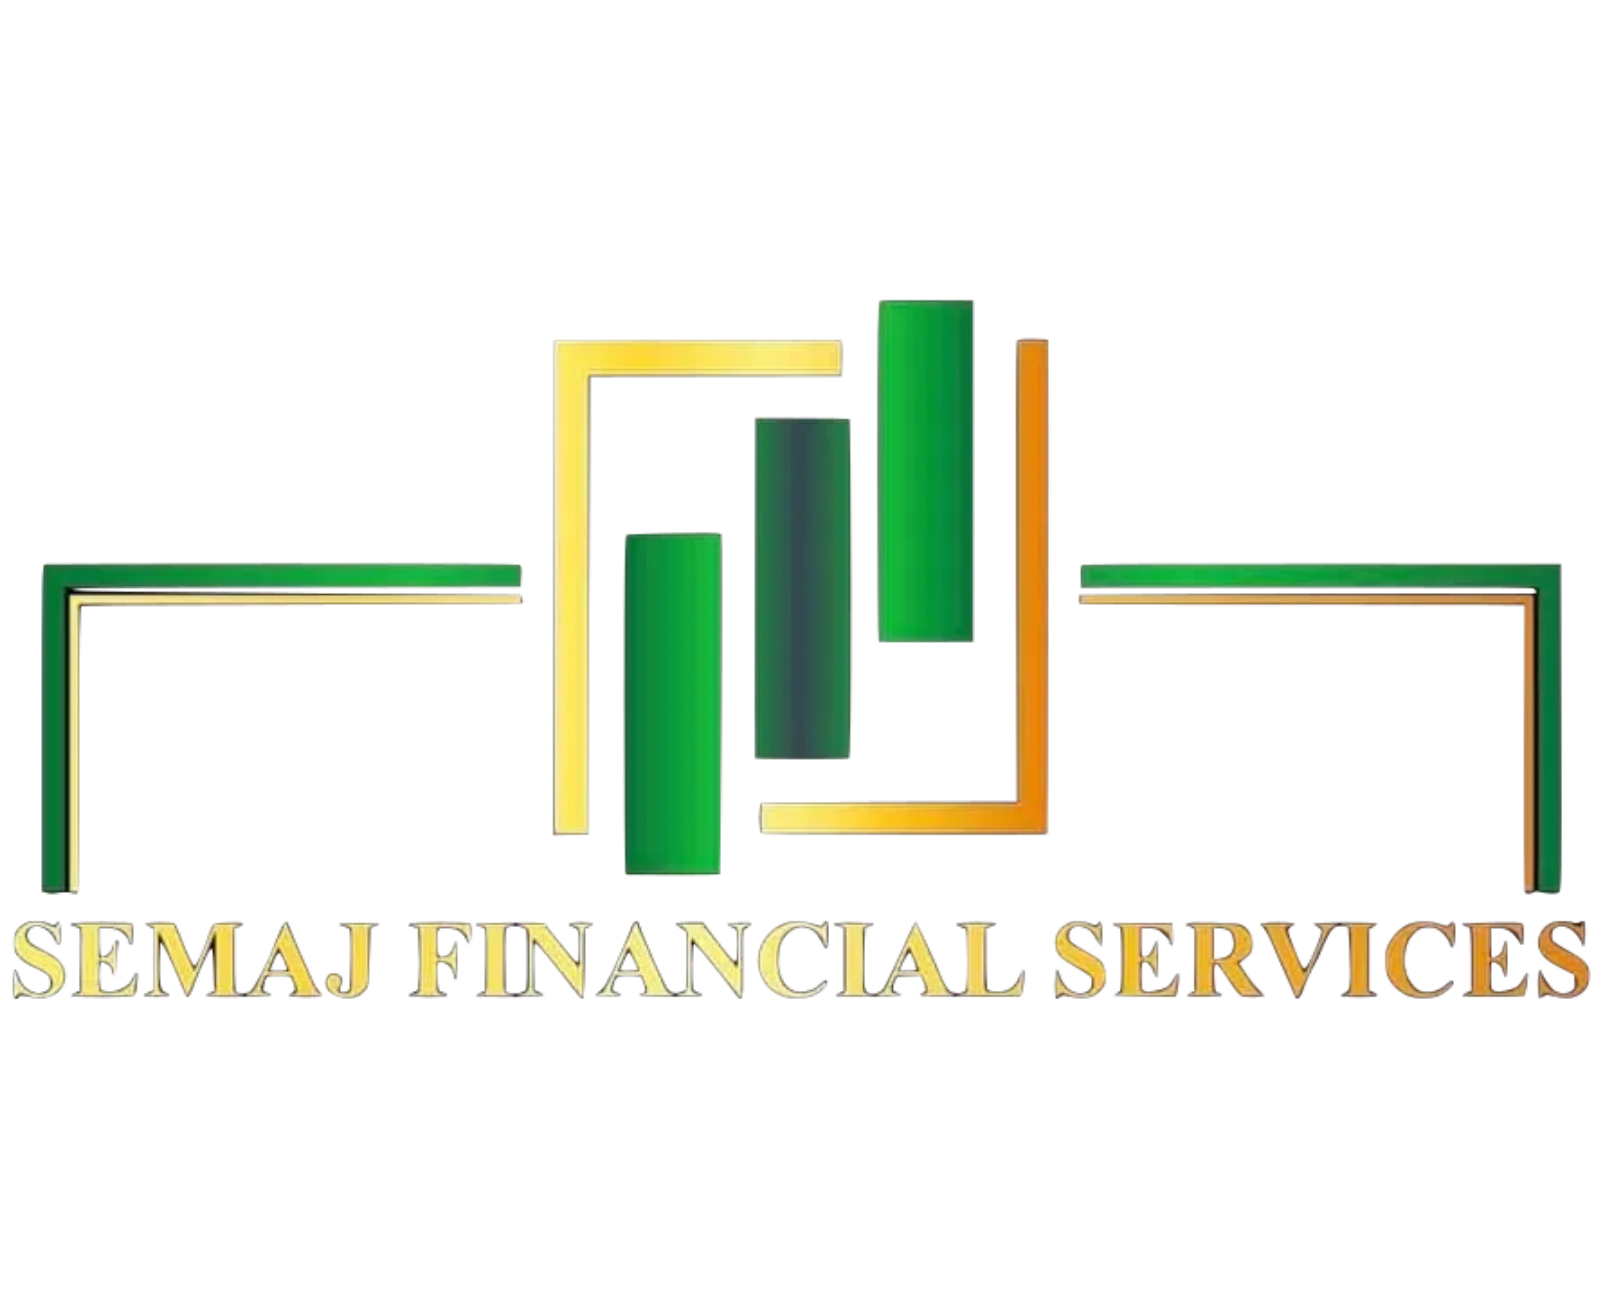 Semaj Financial Services